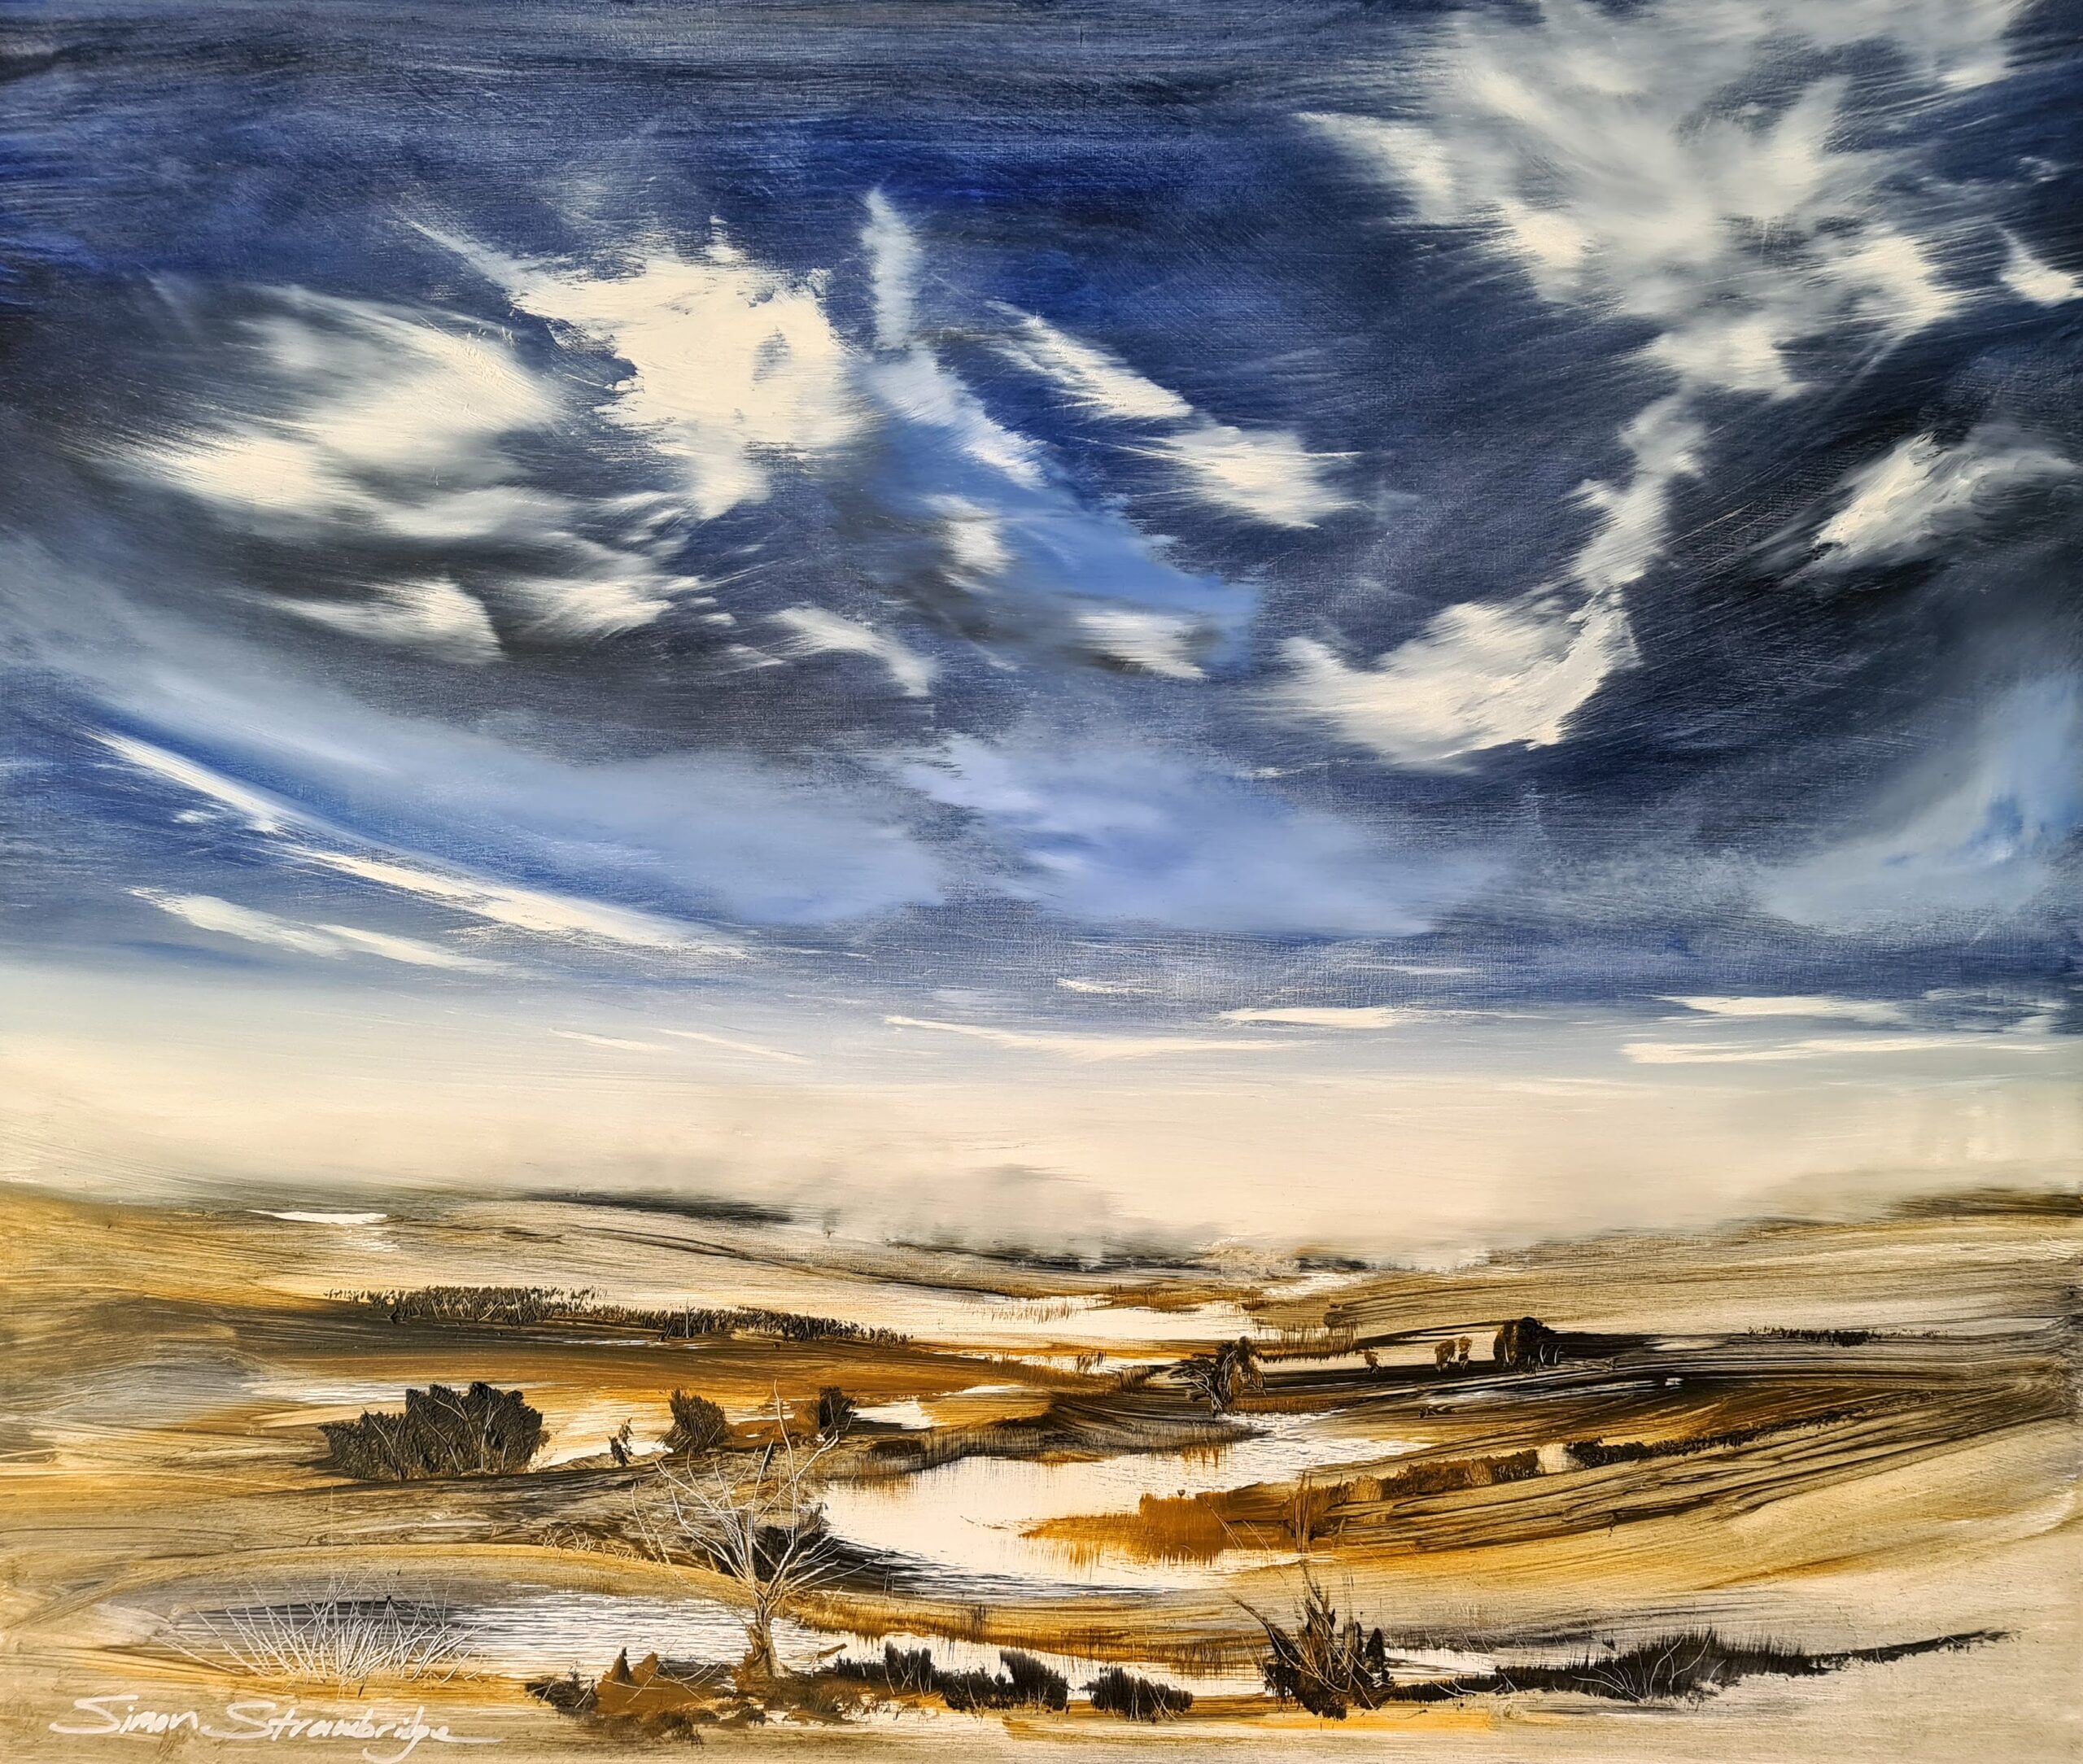 Through the Marsh - Oil Painting by Simon Strawbridge